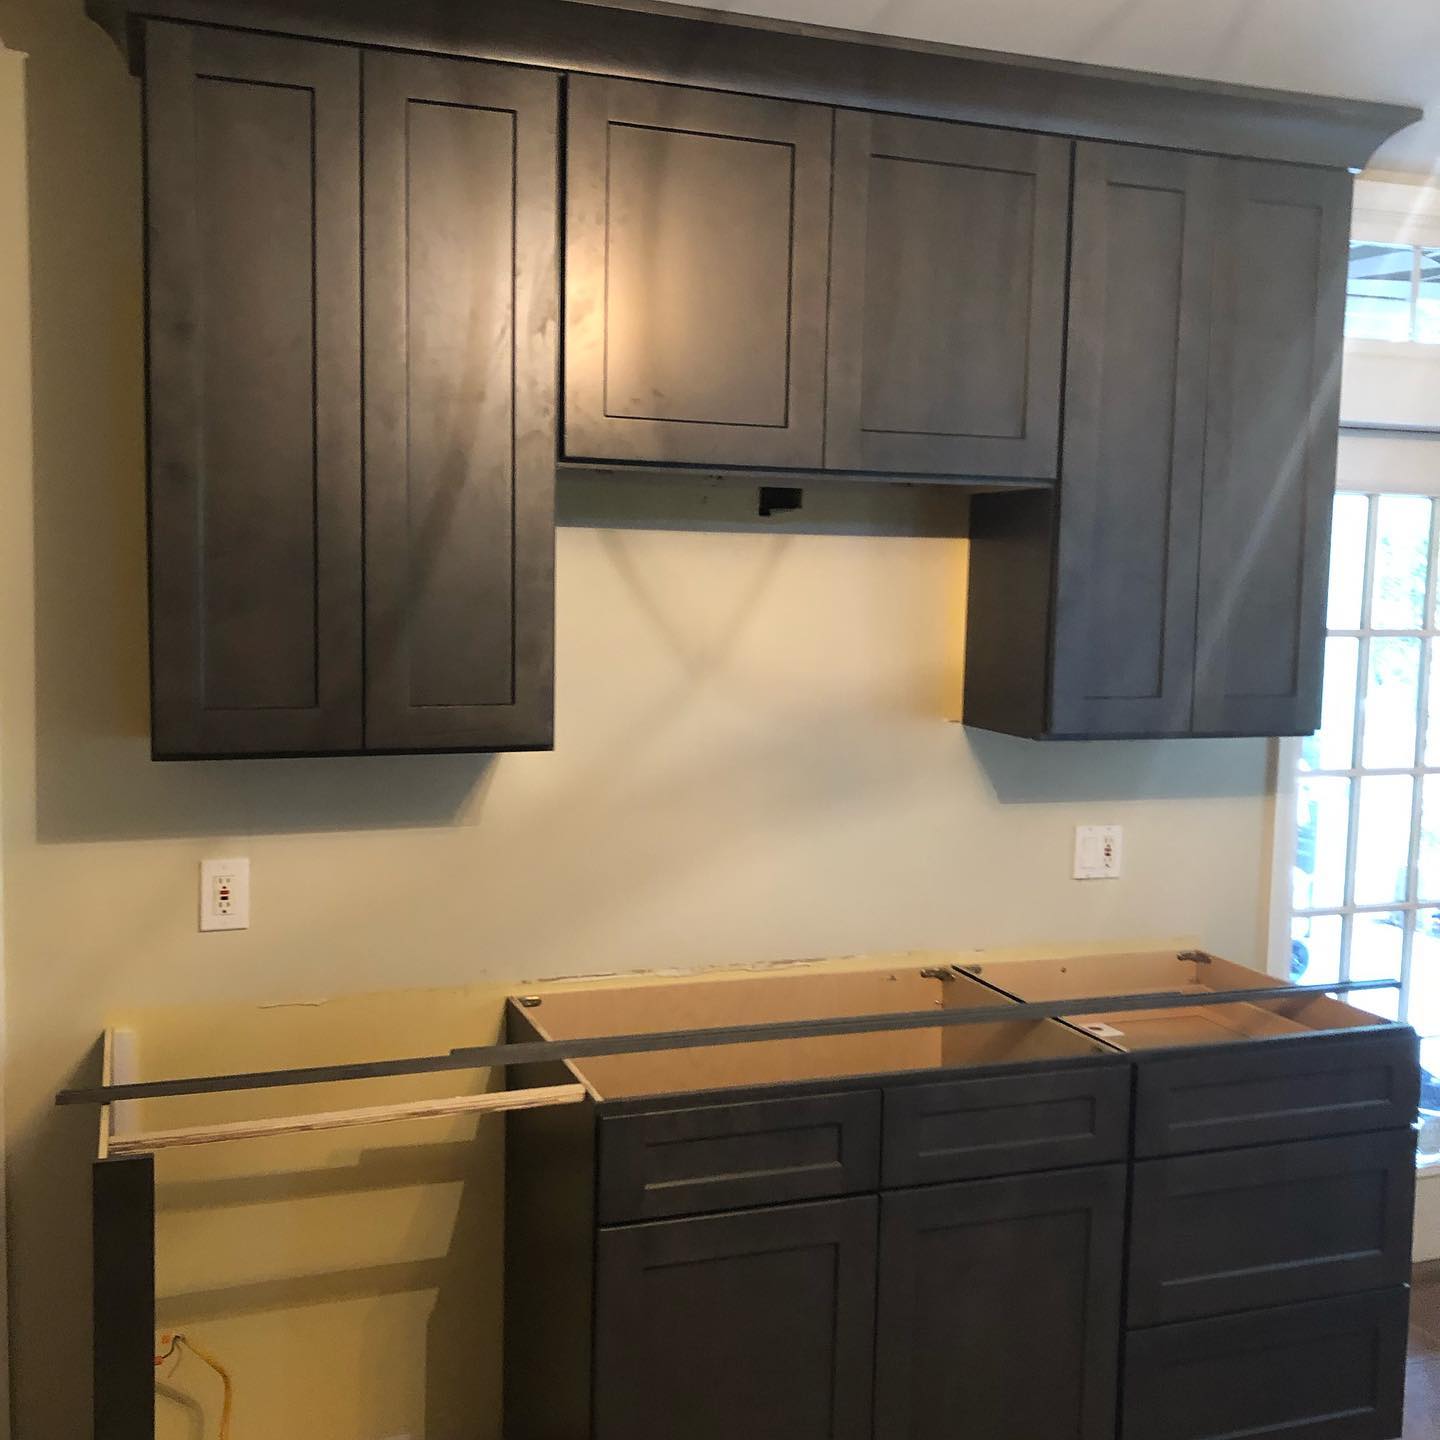 Basement Kitchen Cabinets Installed 6